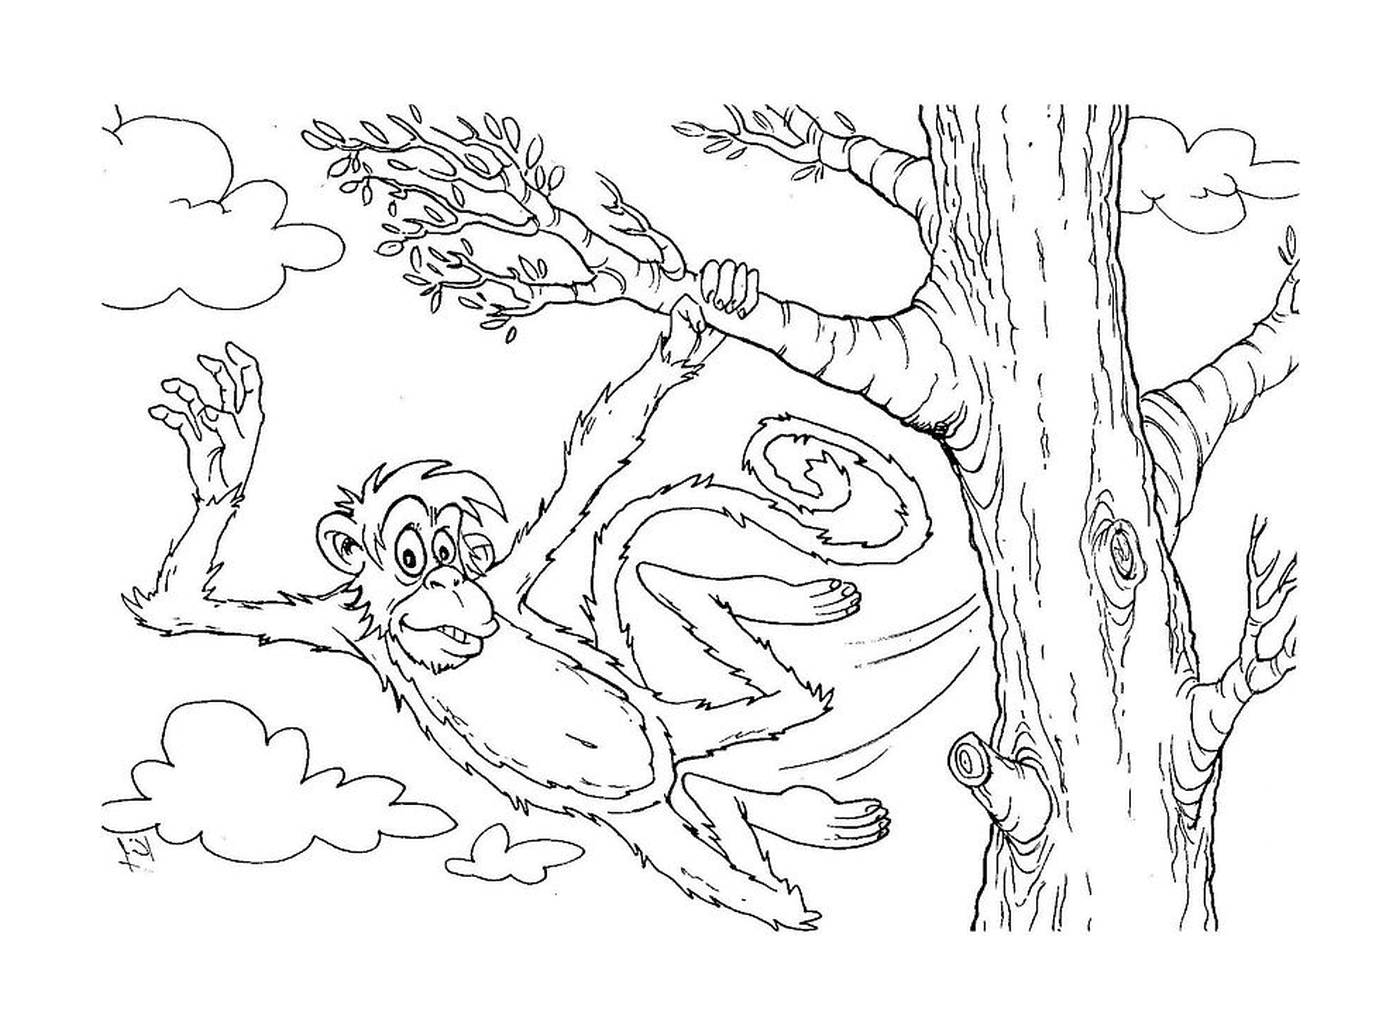  Un mono colgando de un árbol 